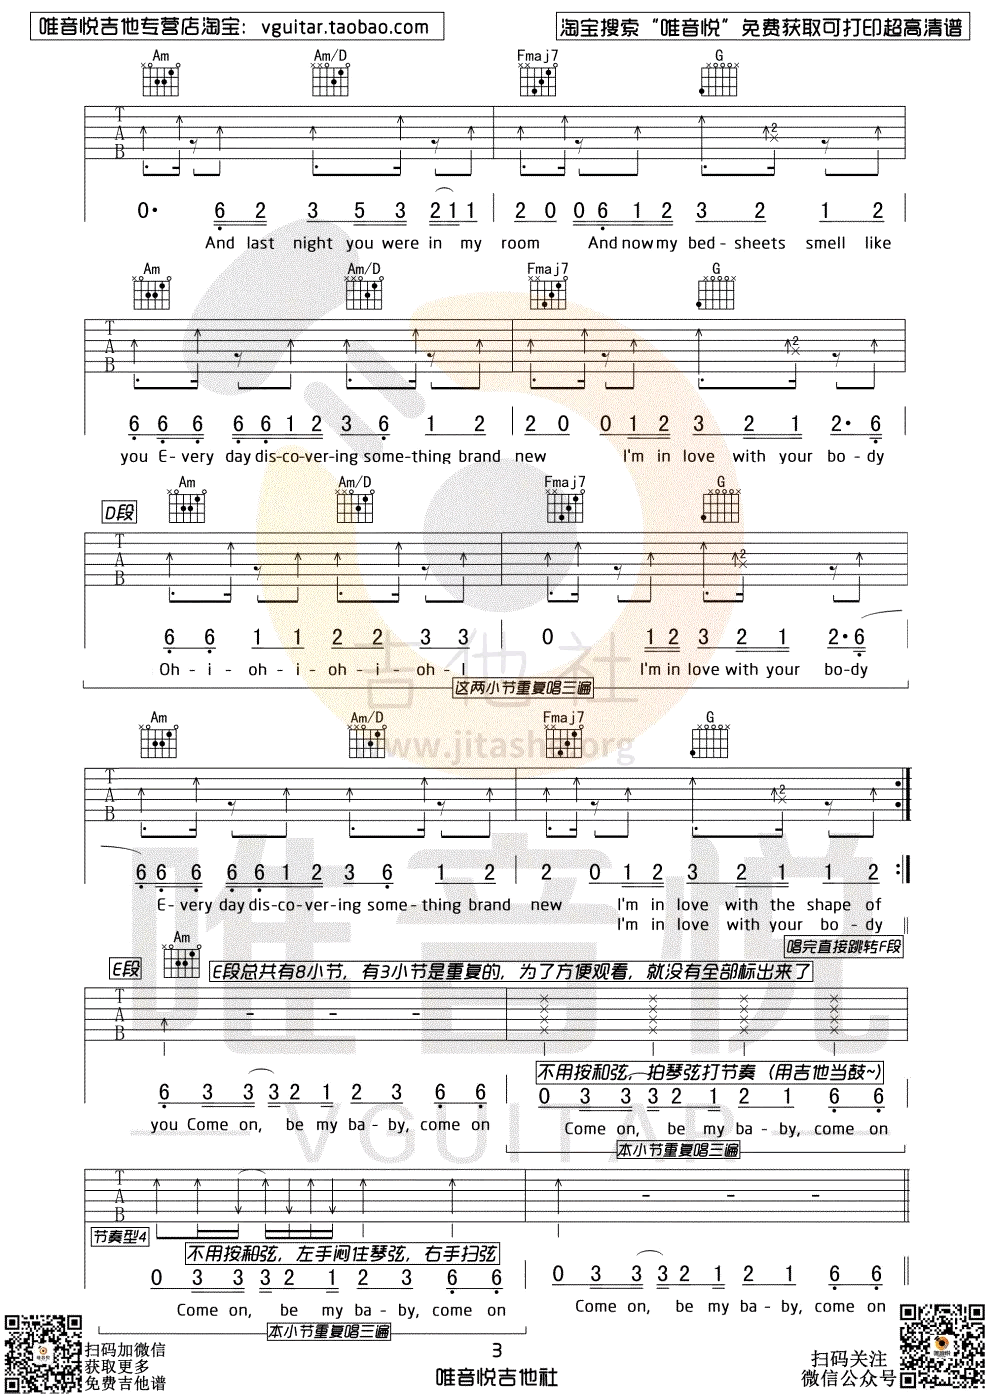 ShapeofYou吉他谱,原版EdSheeran歌曲,简单C调弹唱教学,唯音悦版六线指弹简谱图